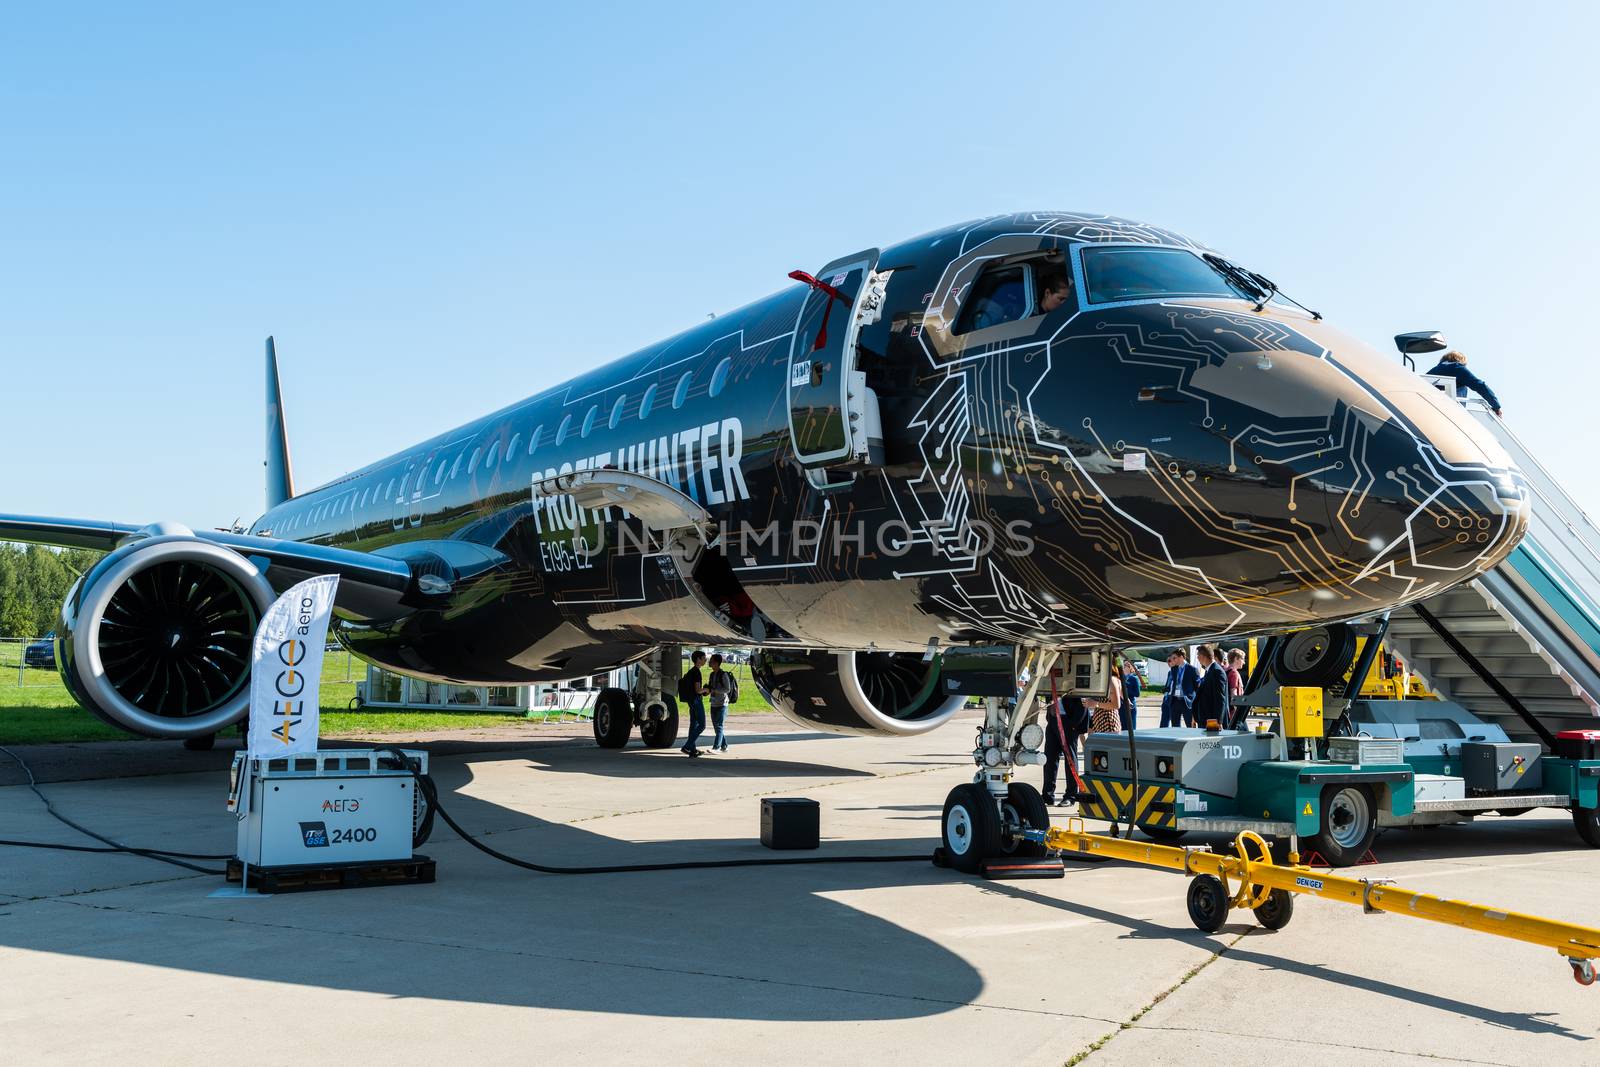 August 30, 2019. Zhukovsky, Russia. Twin-engine narrow-body passenger aircraft Embraer E-Jet E195-E2
at the International Aviation and Space Salon MAKS 2019.